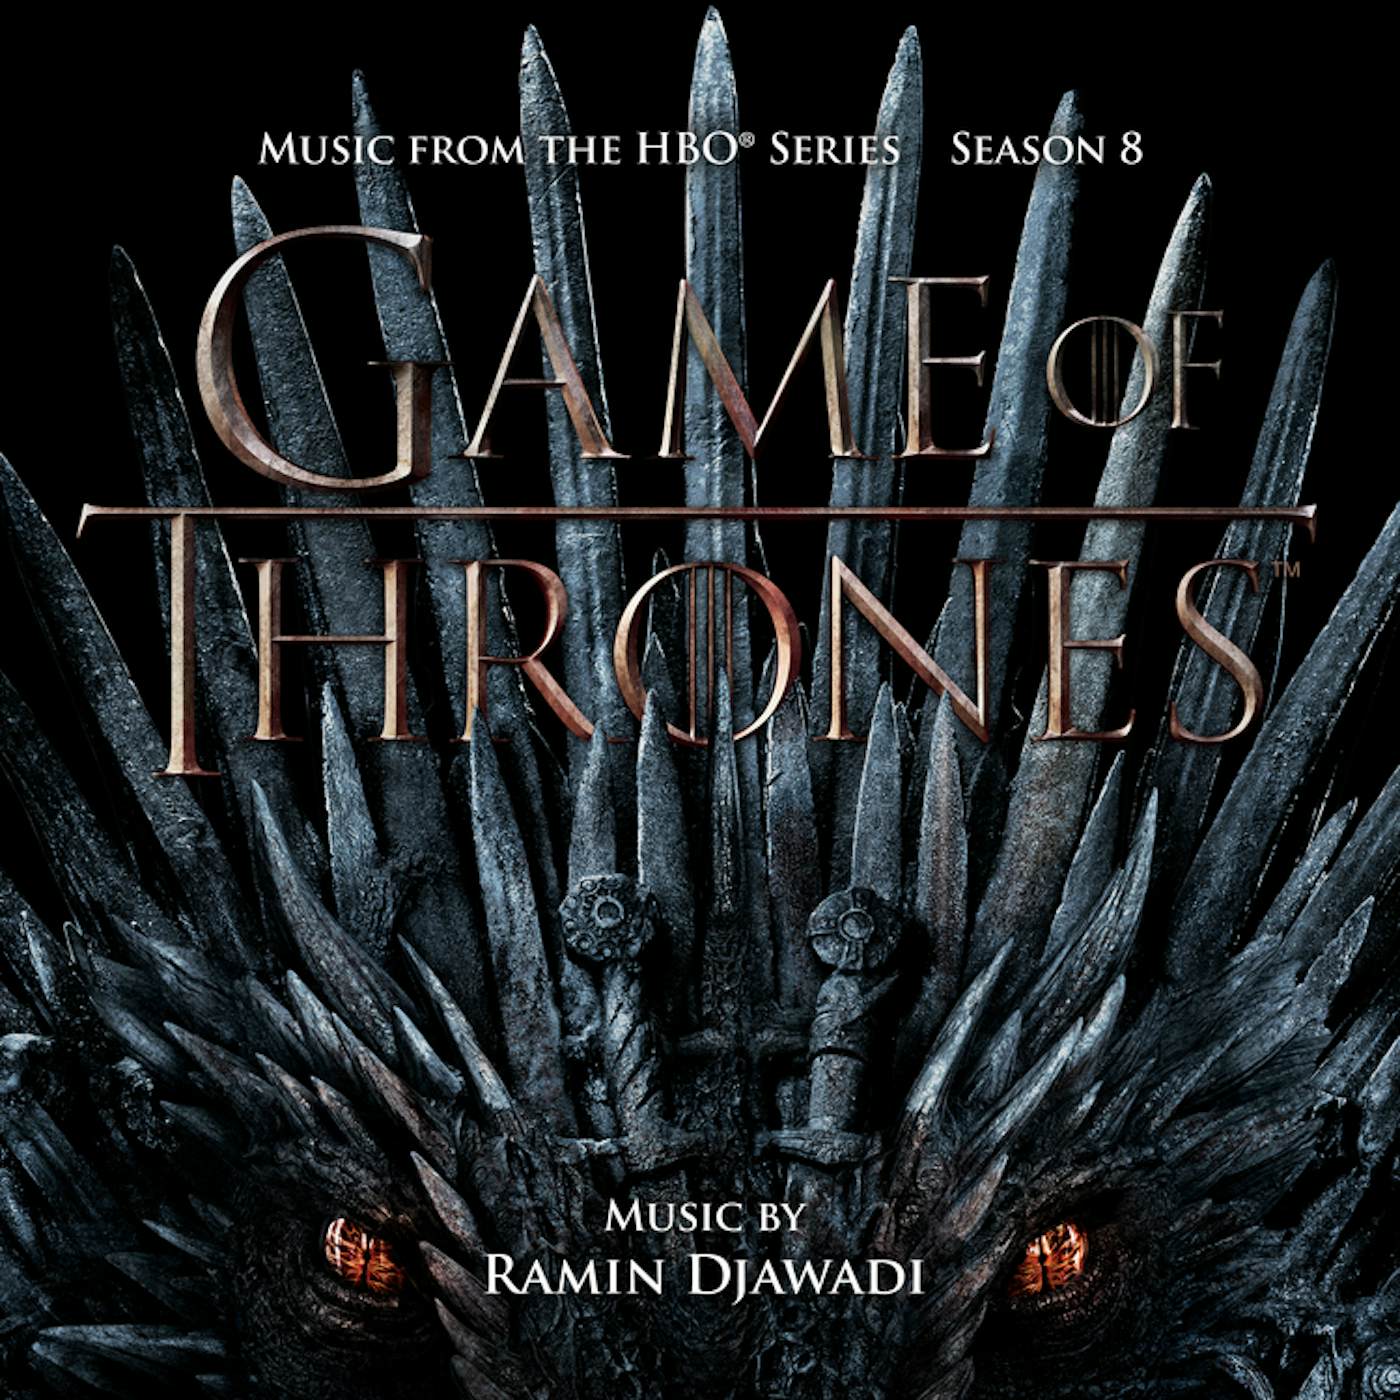 Ramin Djawadi GAME OF THRONES: SEASON 8 (MUSIC FROM THE HBO) CD